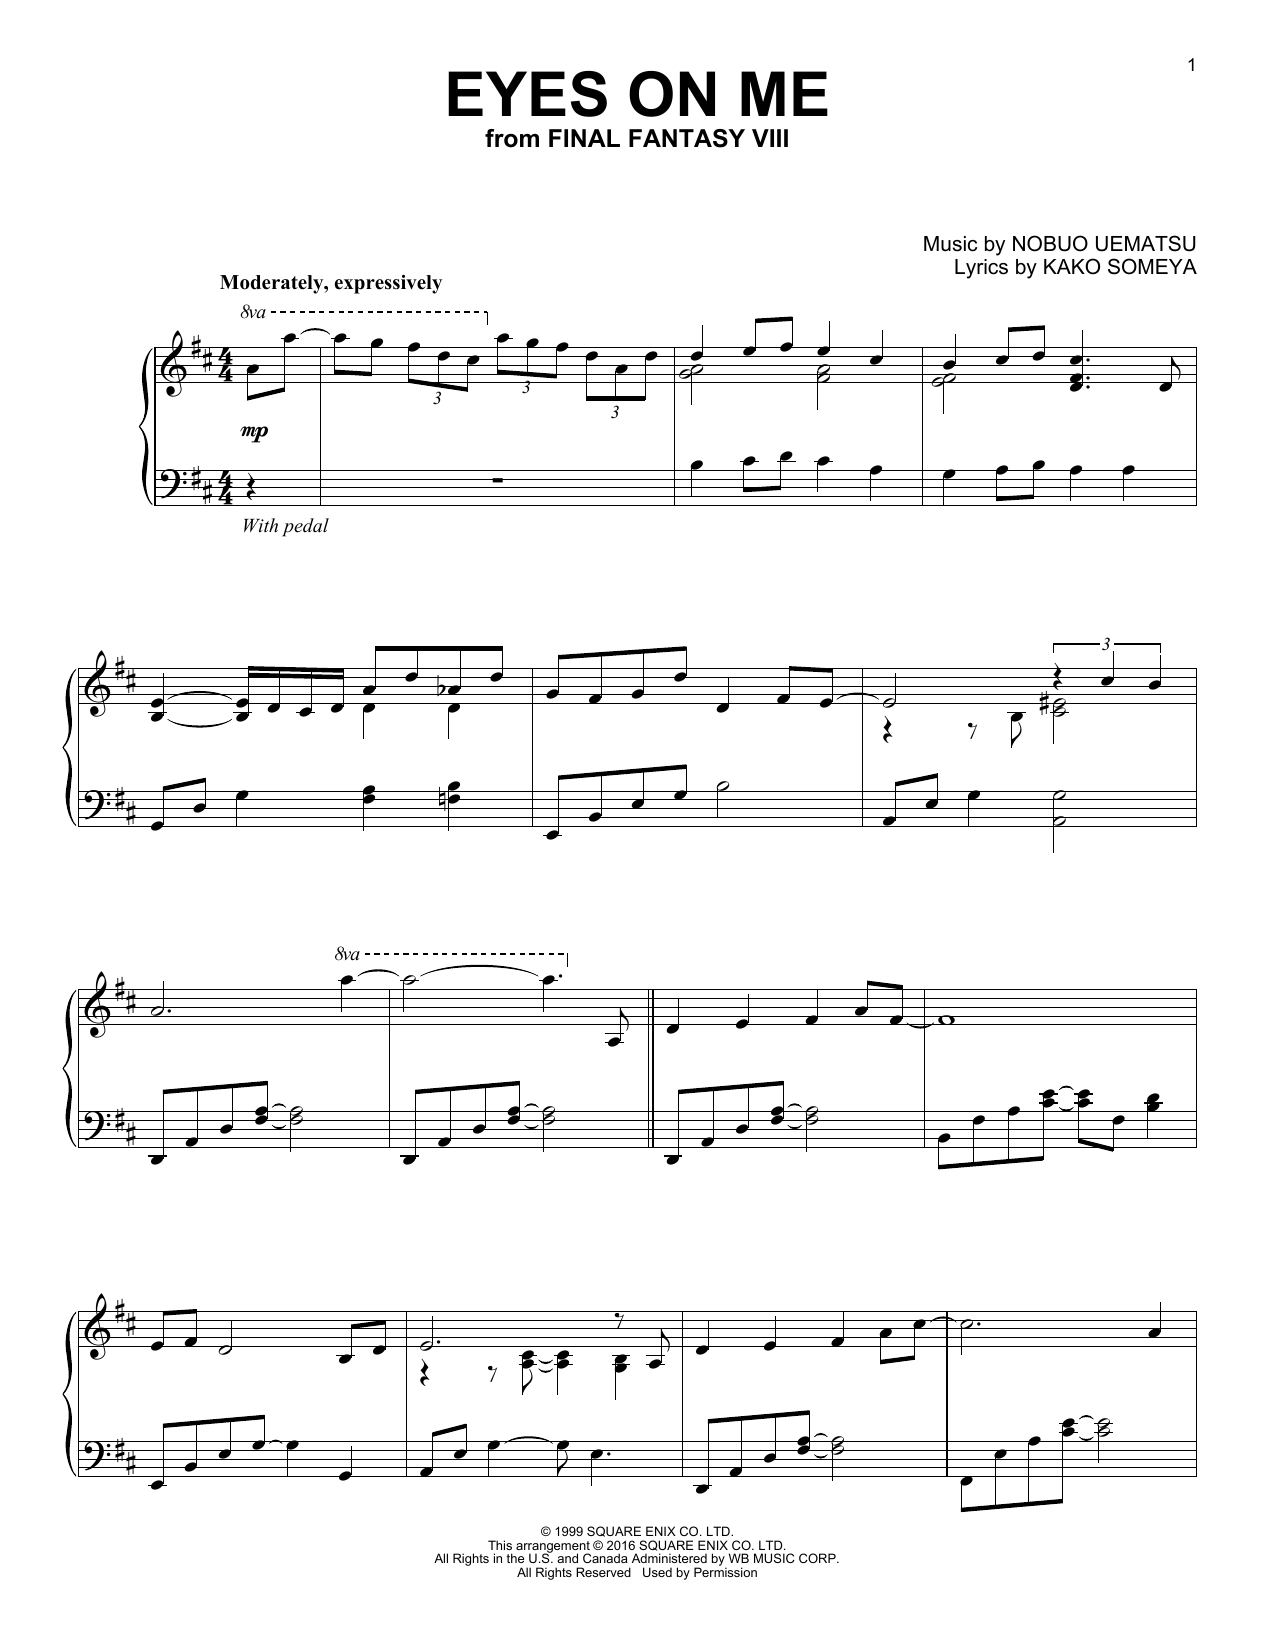 Kako Someya & Nobuo Uematsu Eyes On Me (from Final Fantasy VIII) Sheet Music Notes & Chords for Piano - Download or Print PDF